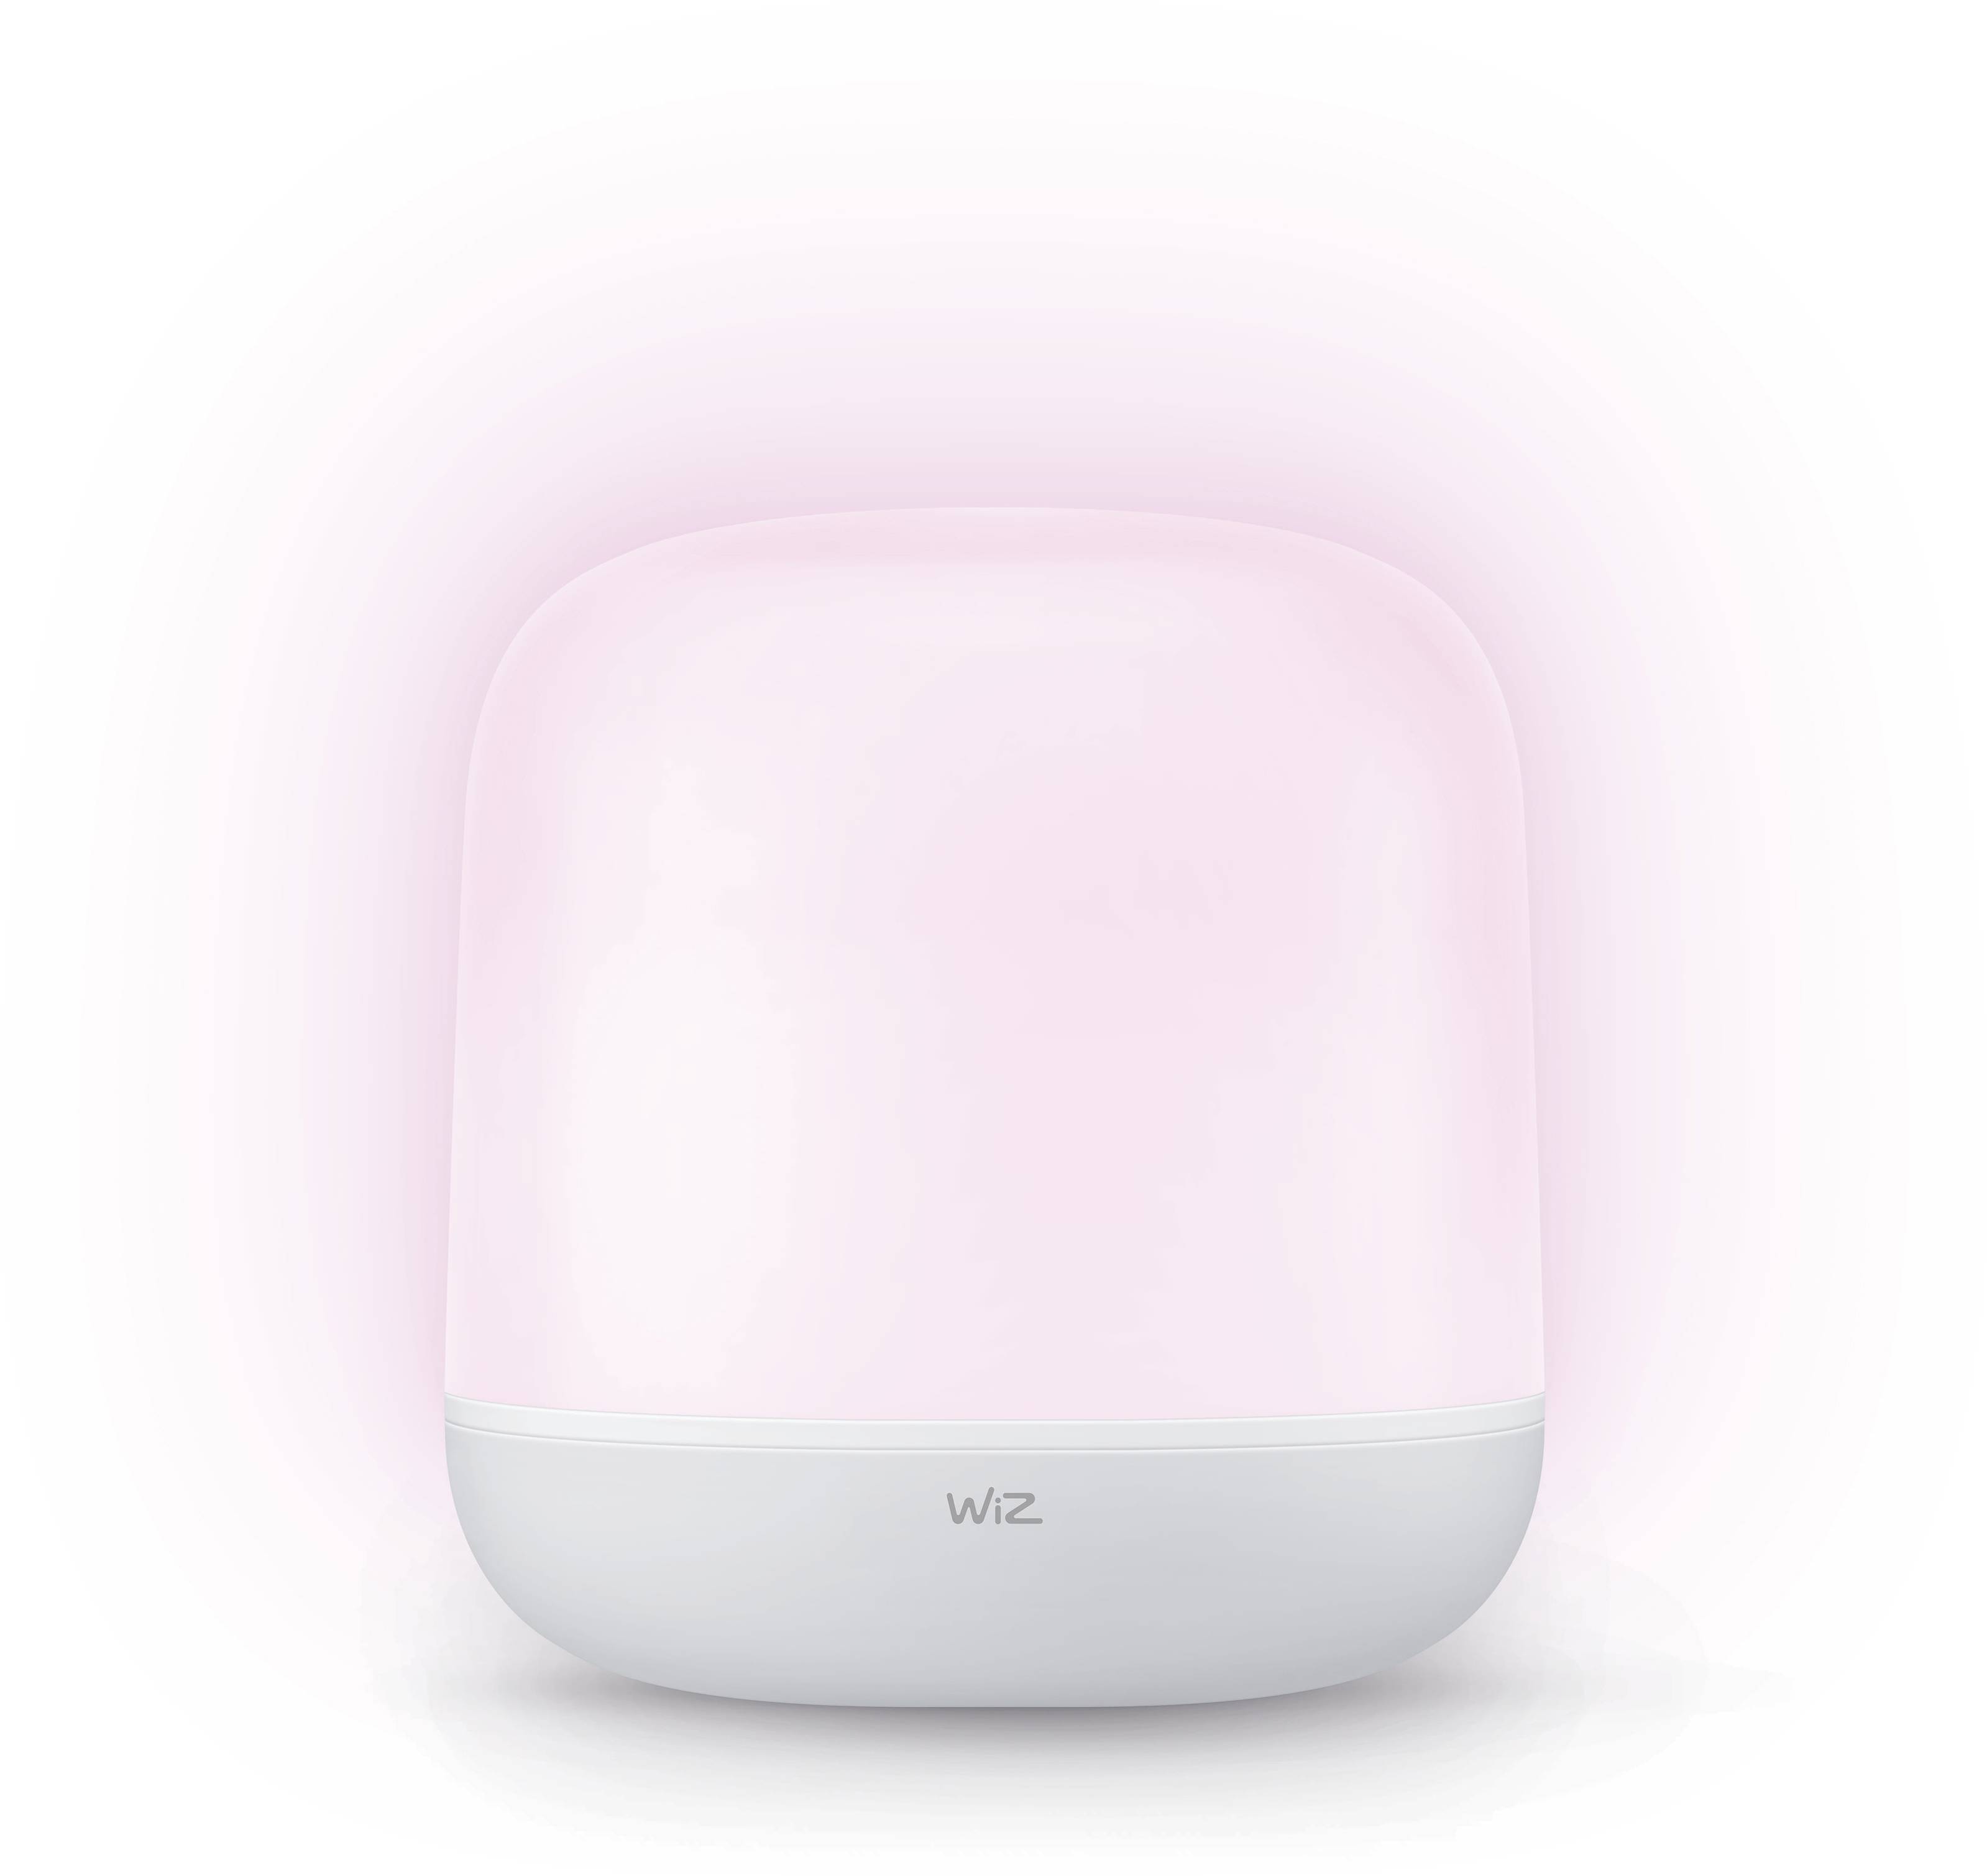 WiZ Wi-Fi BLE Portable Hero Type LED white 871951455171800 LED-Tischlampe kaufen Weiß C